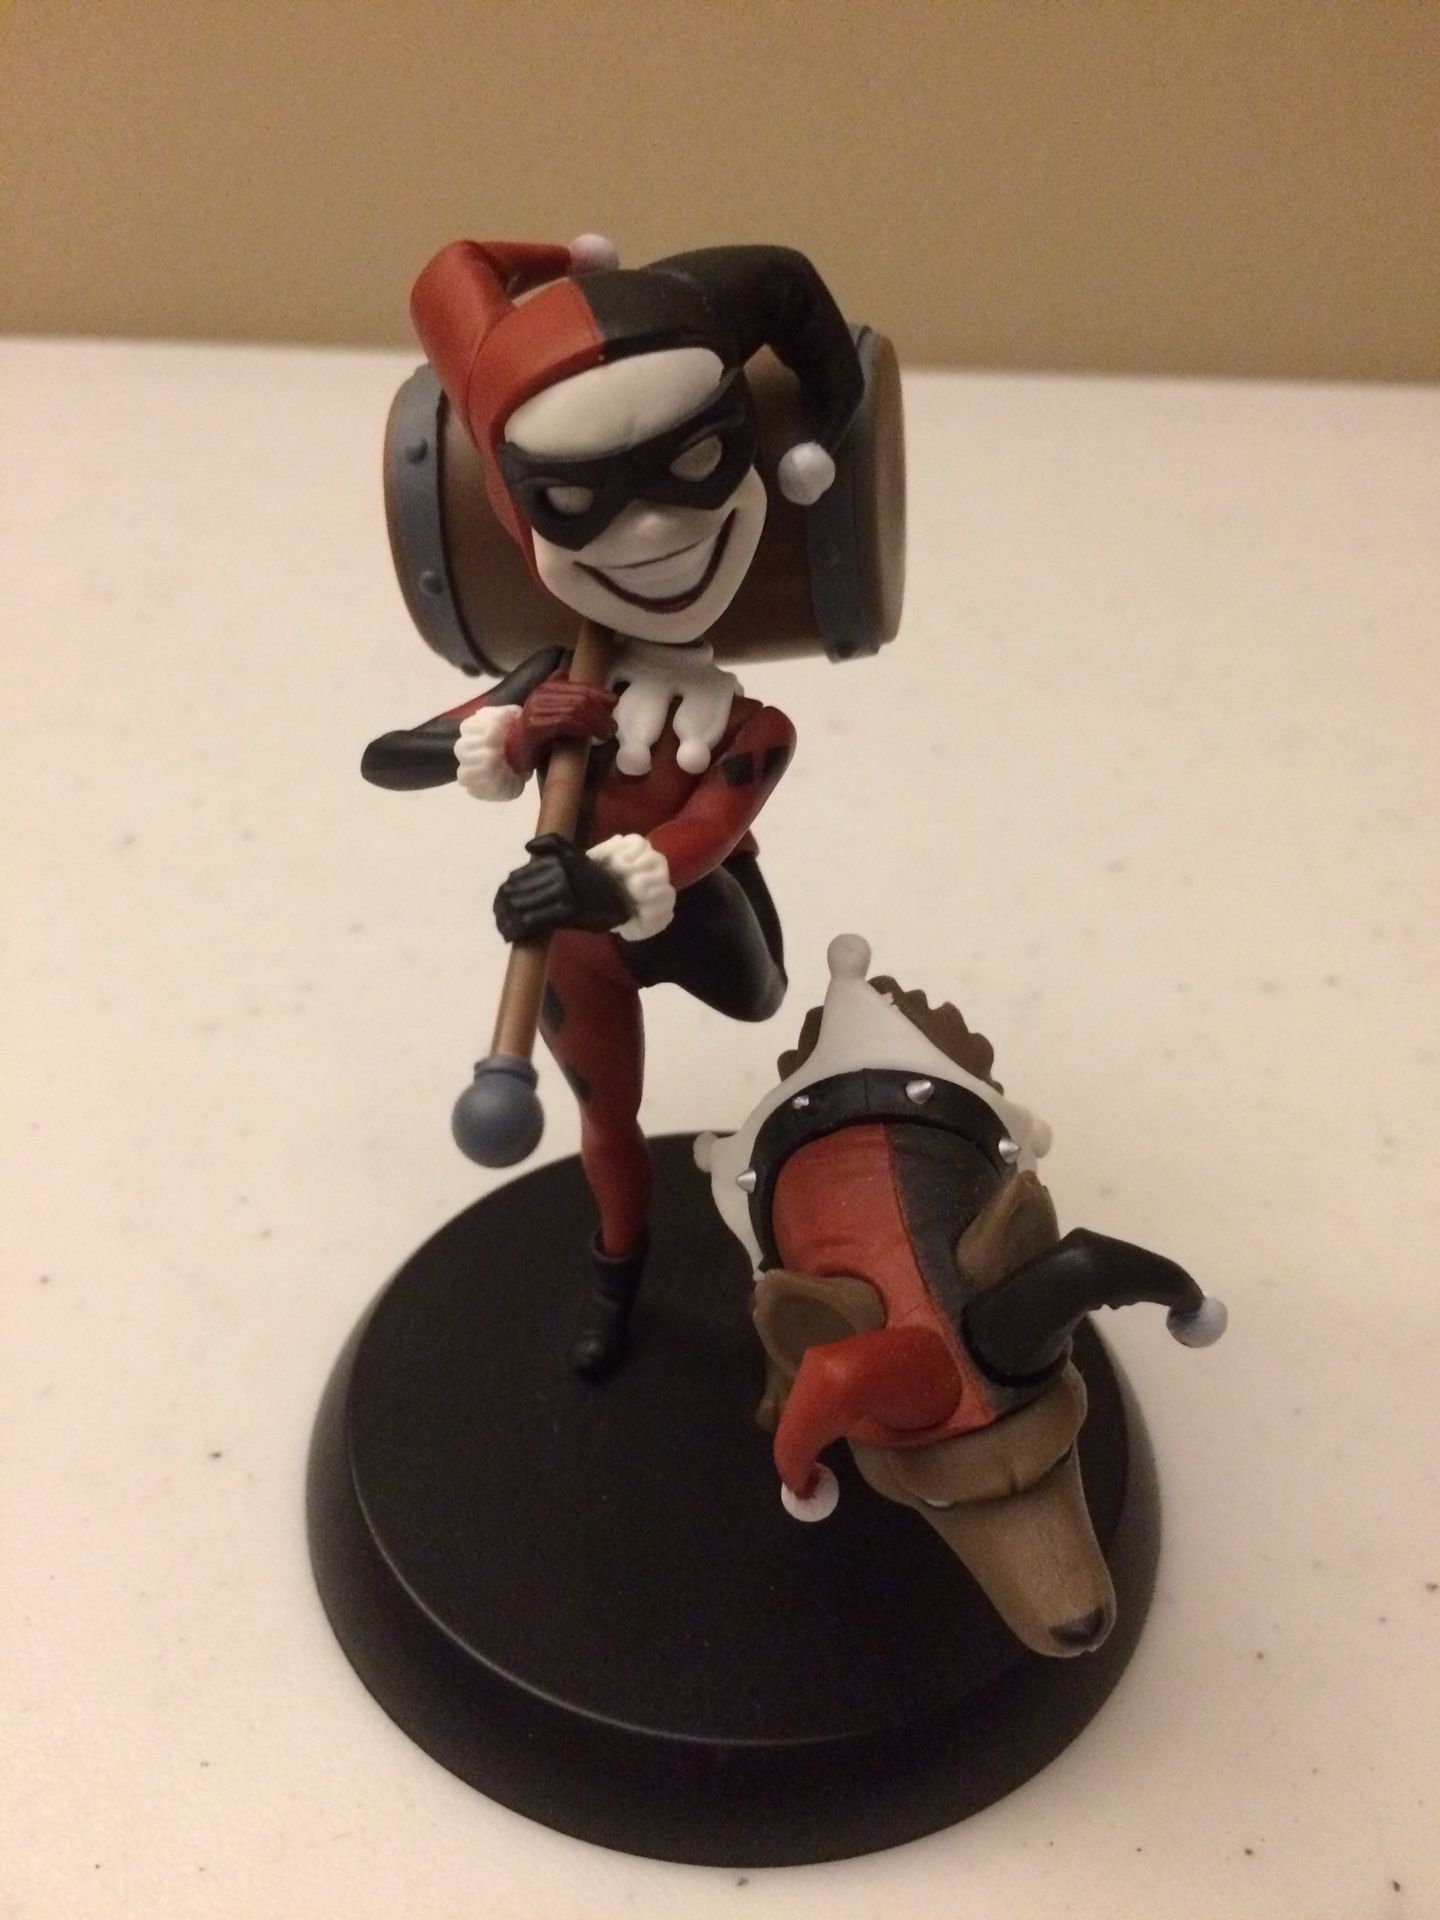 Harley Quinn QFig Batman action figure DC comics adult collectible figurine